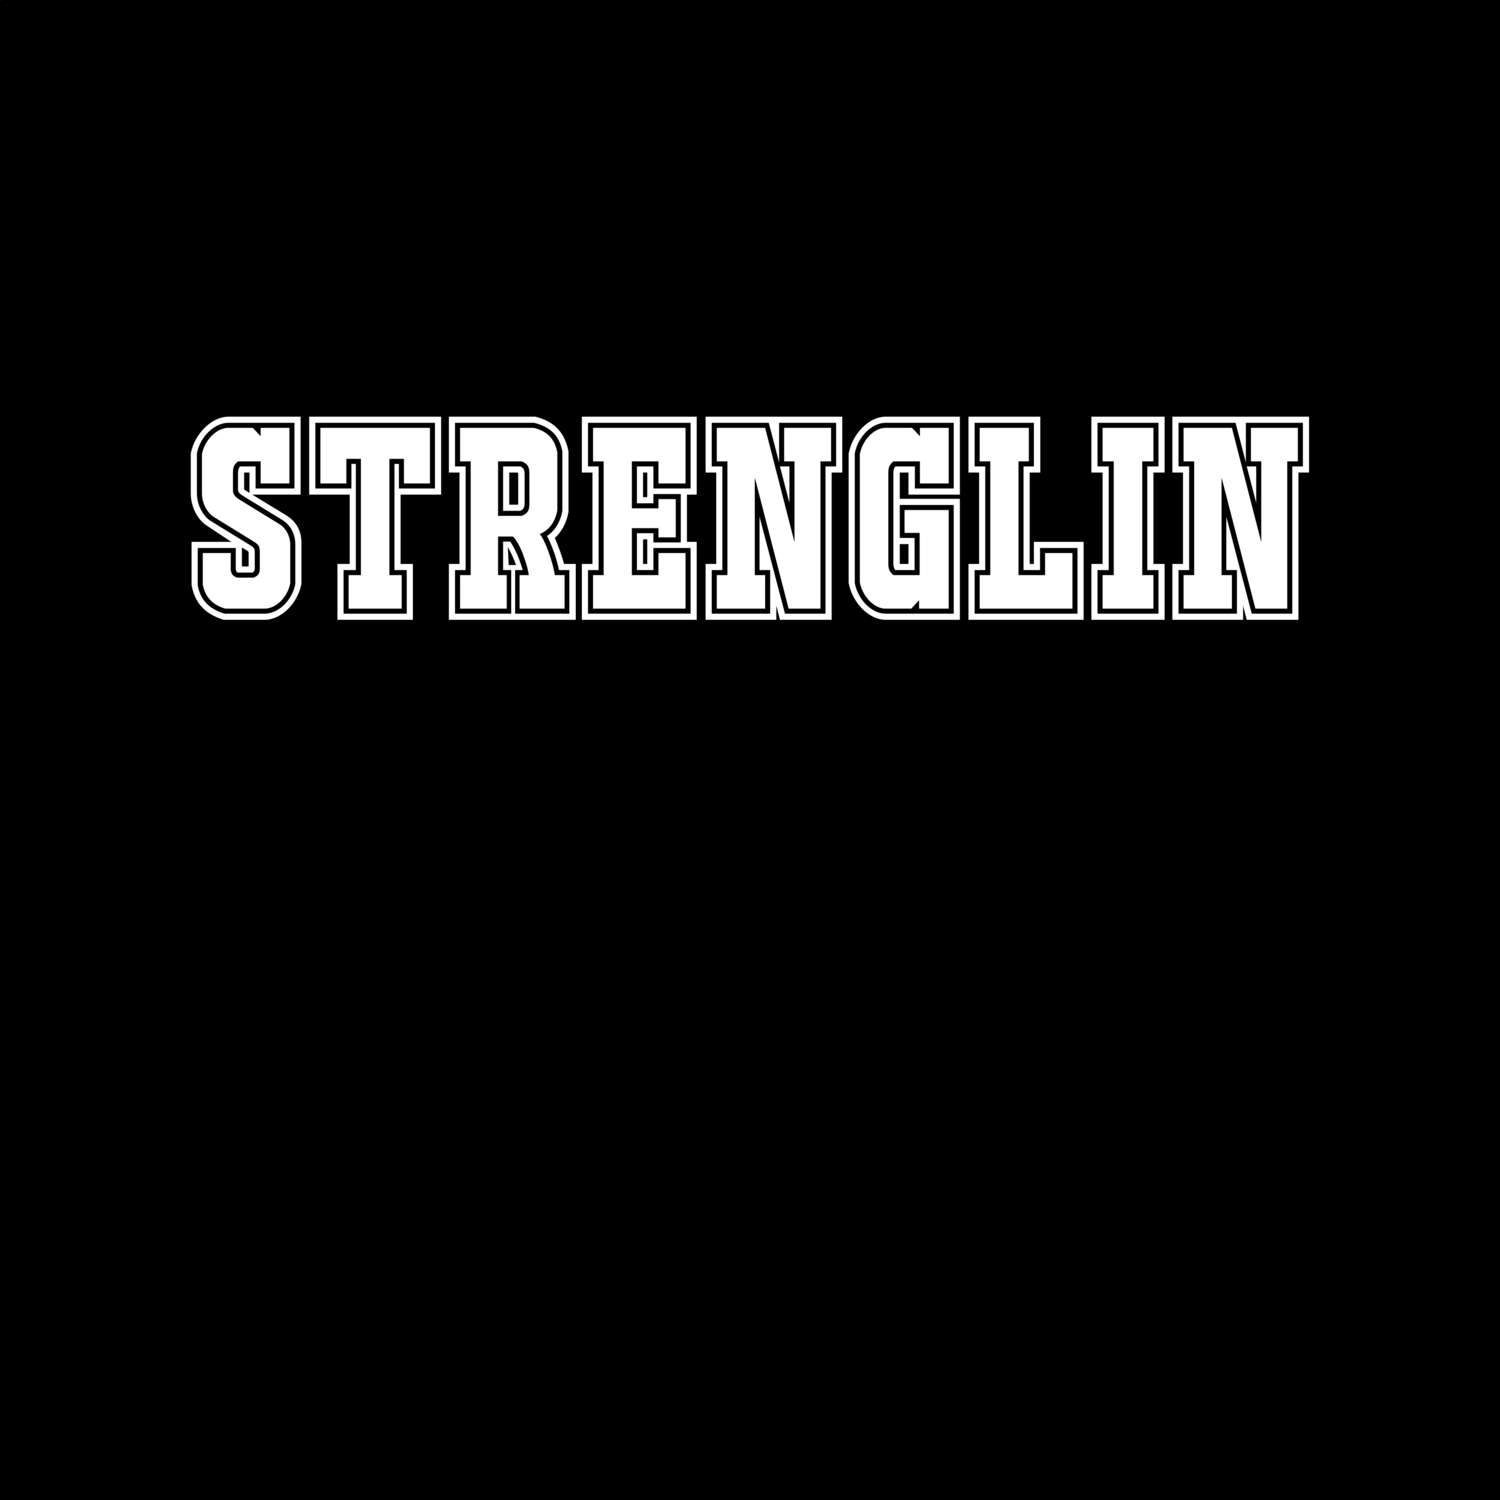 Strenglin T-Shirt »Classic«